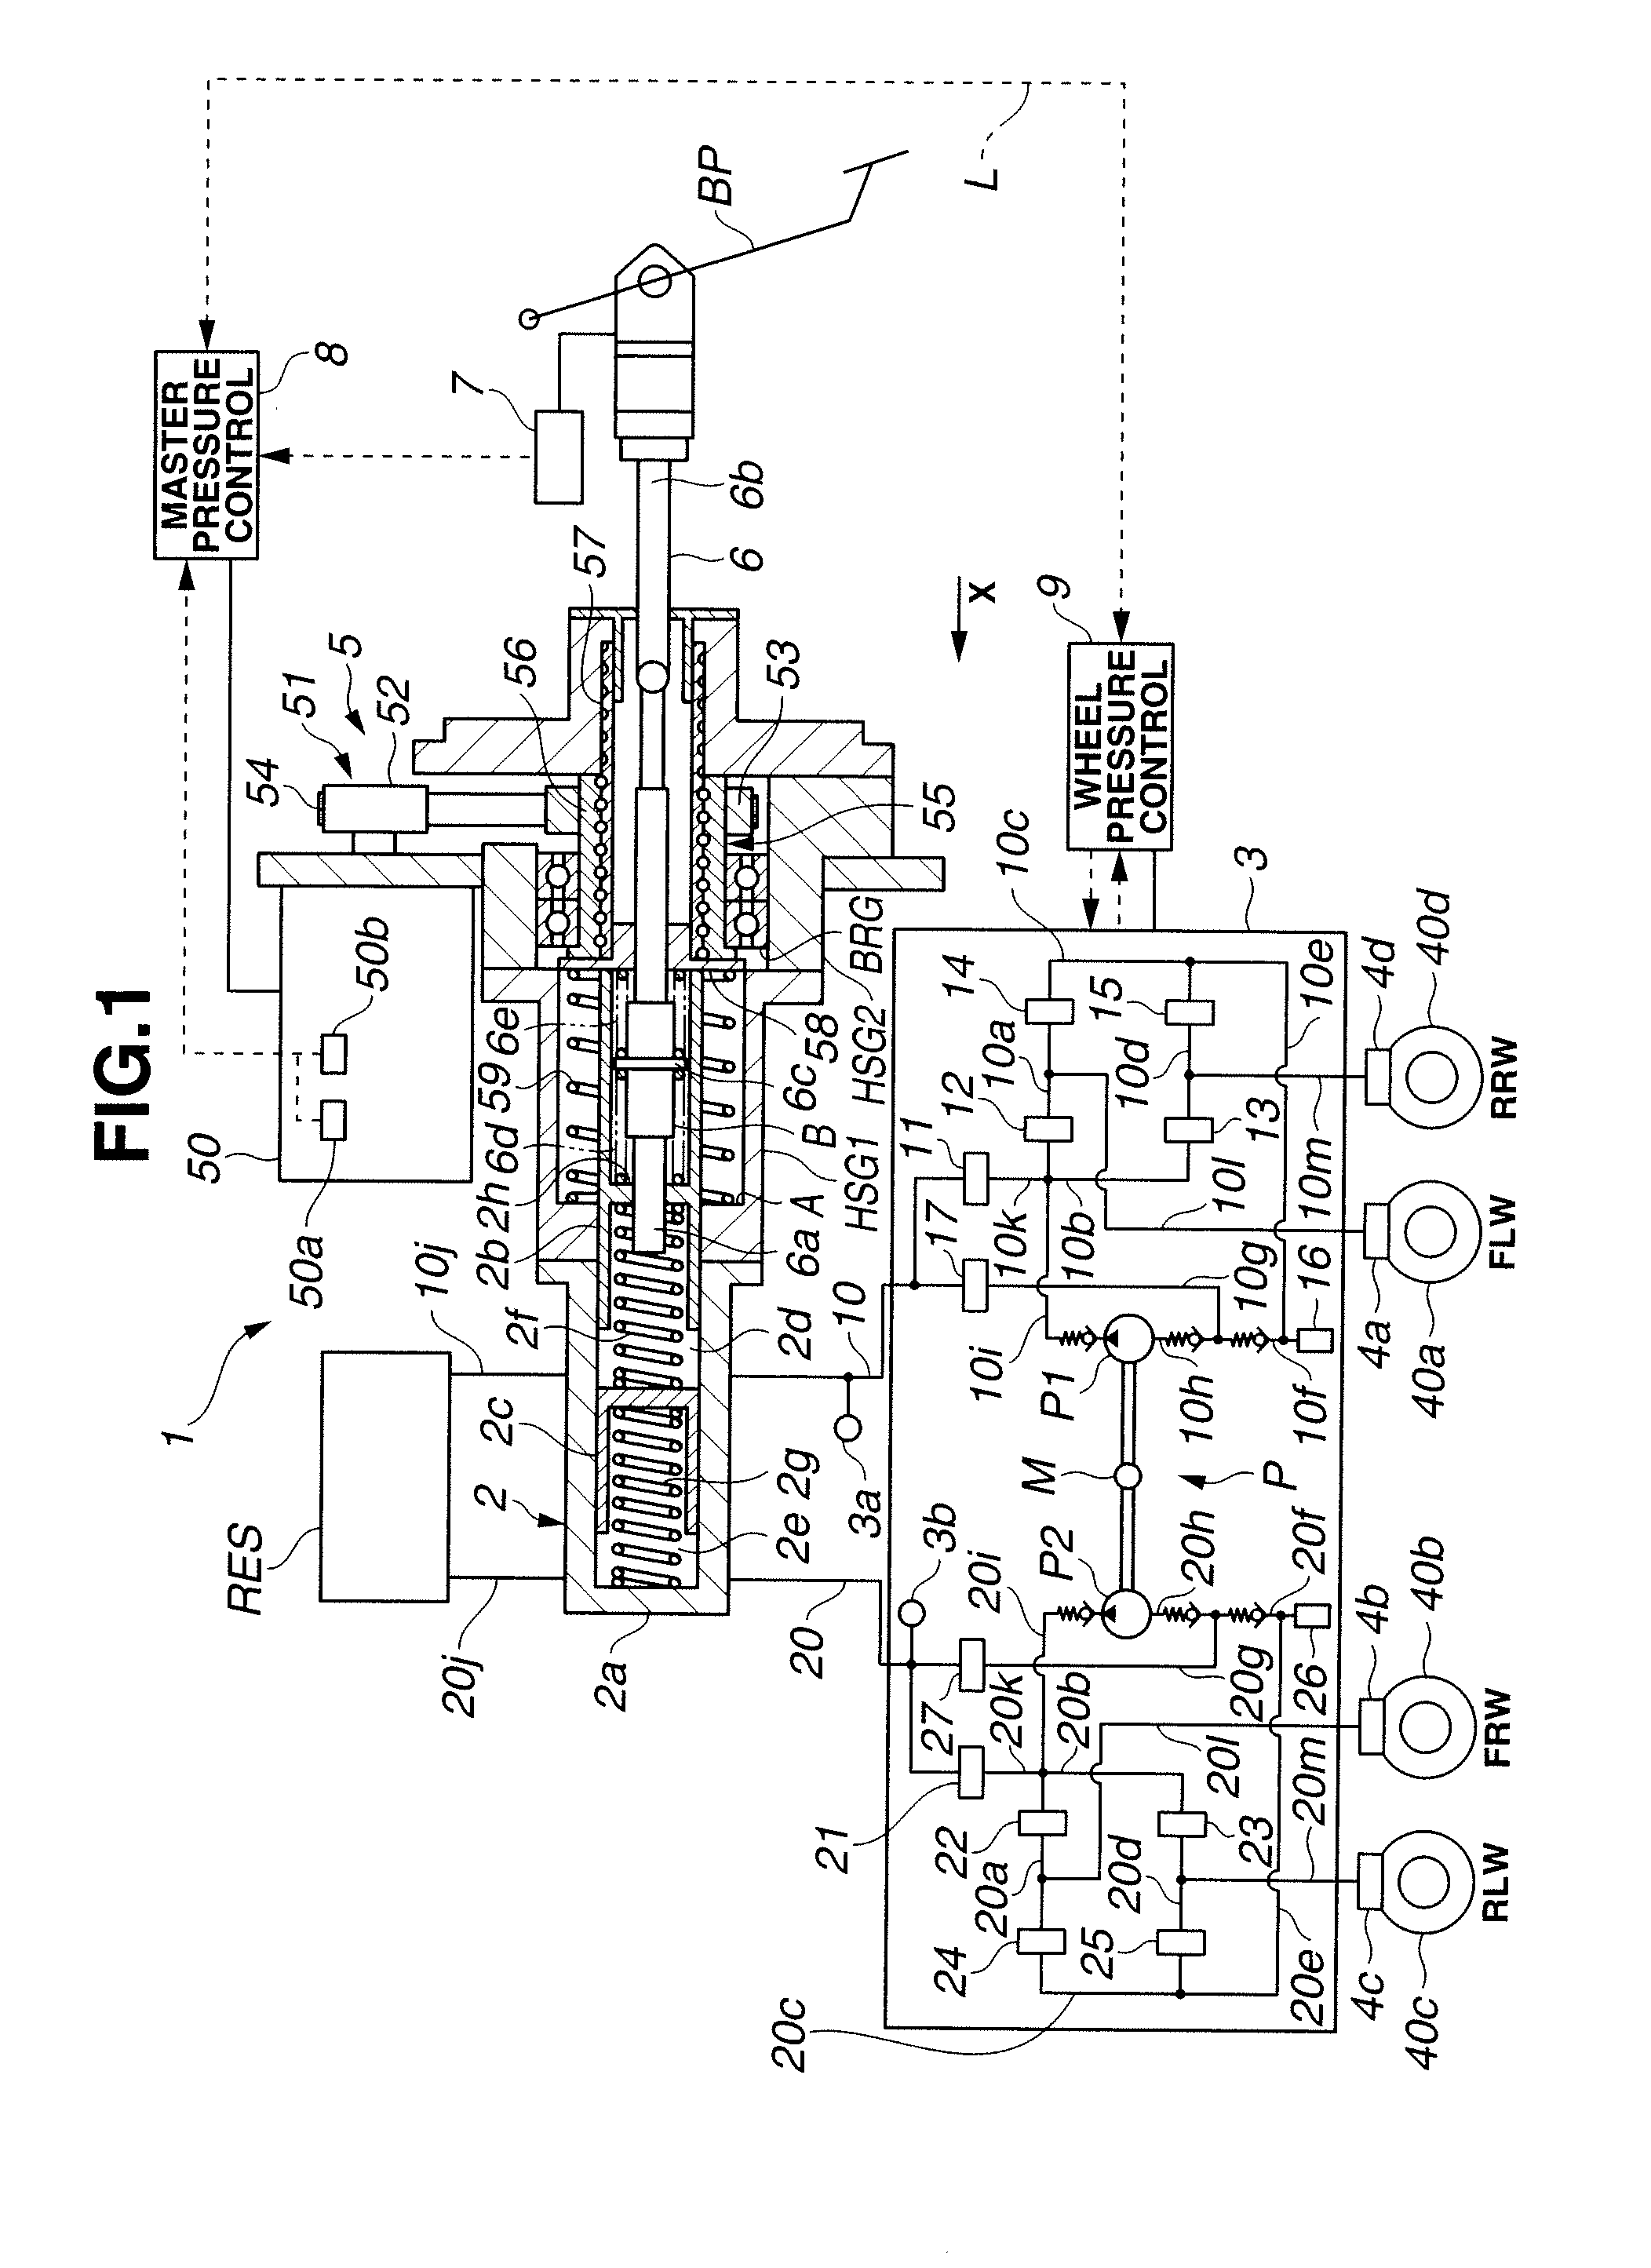 Brake control apparatus and method